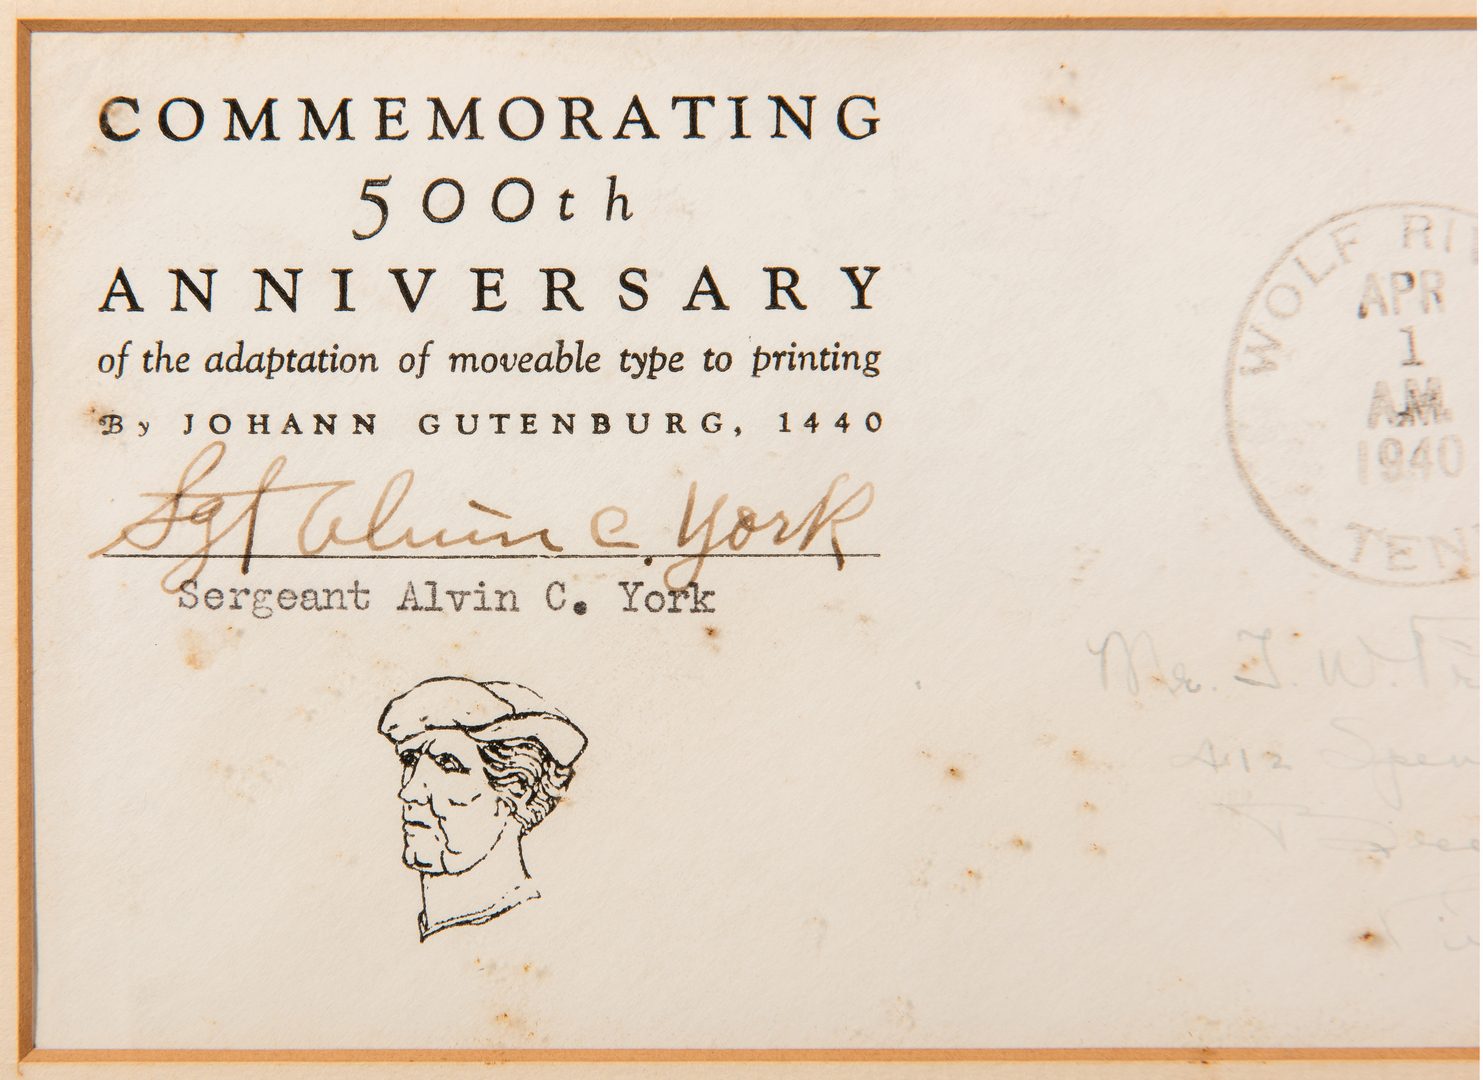 Lot 830: Alvin York framed autographs